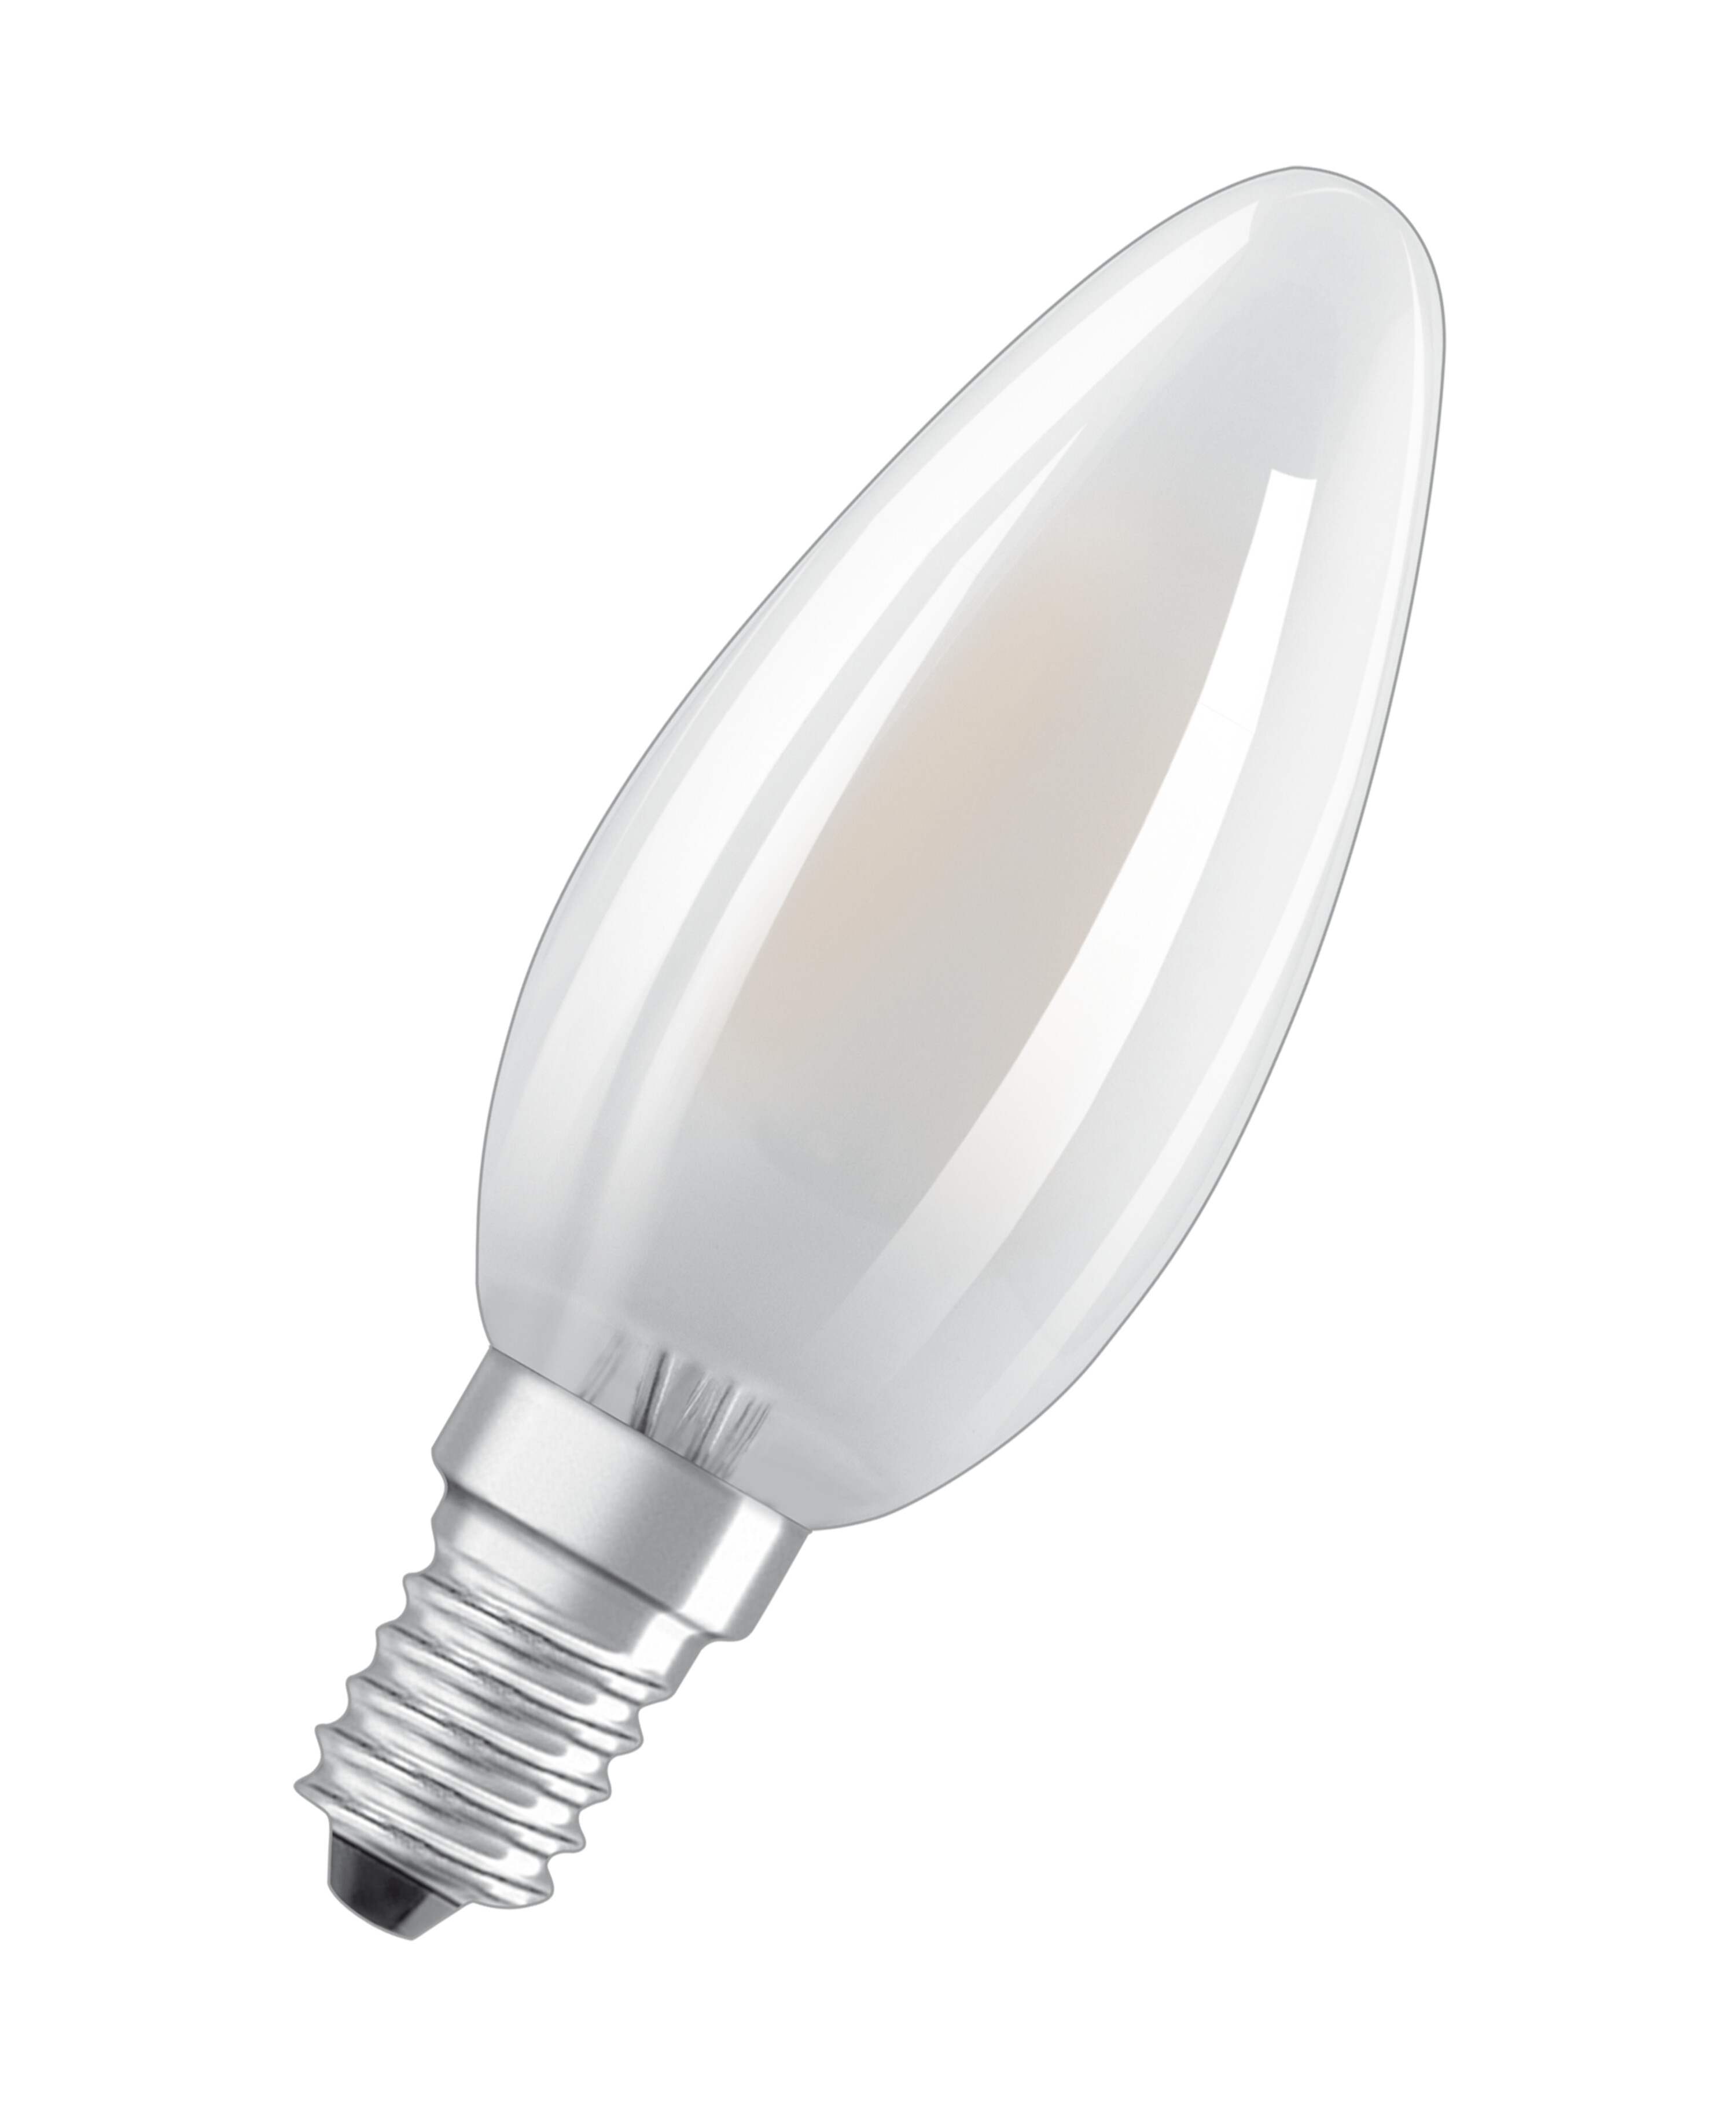 Lumen 470 OSRAM  Lampe B LED LED Retrofit CLASSIC Kaltweiß